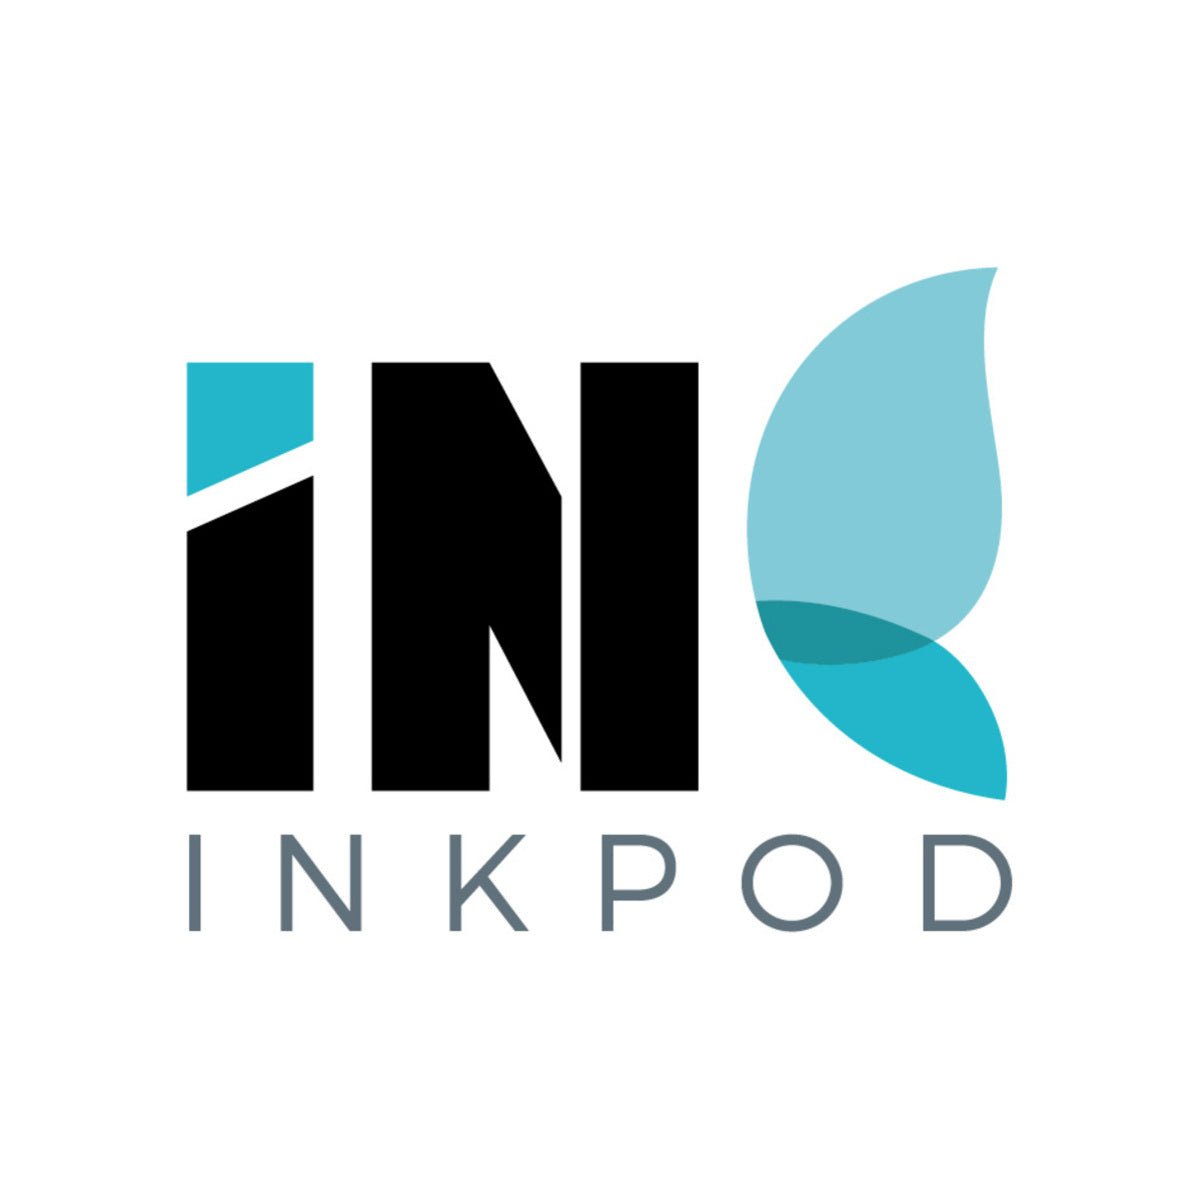 Ink POD: Print on Demand Shopify App